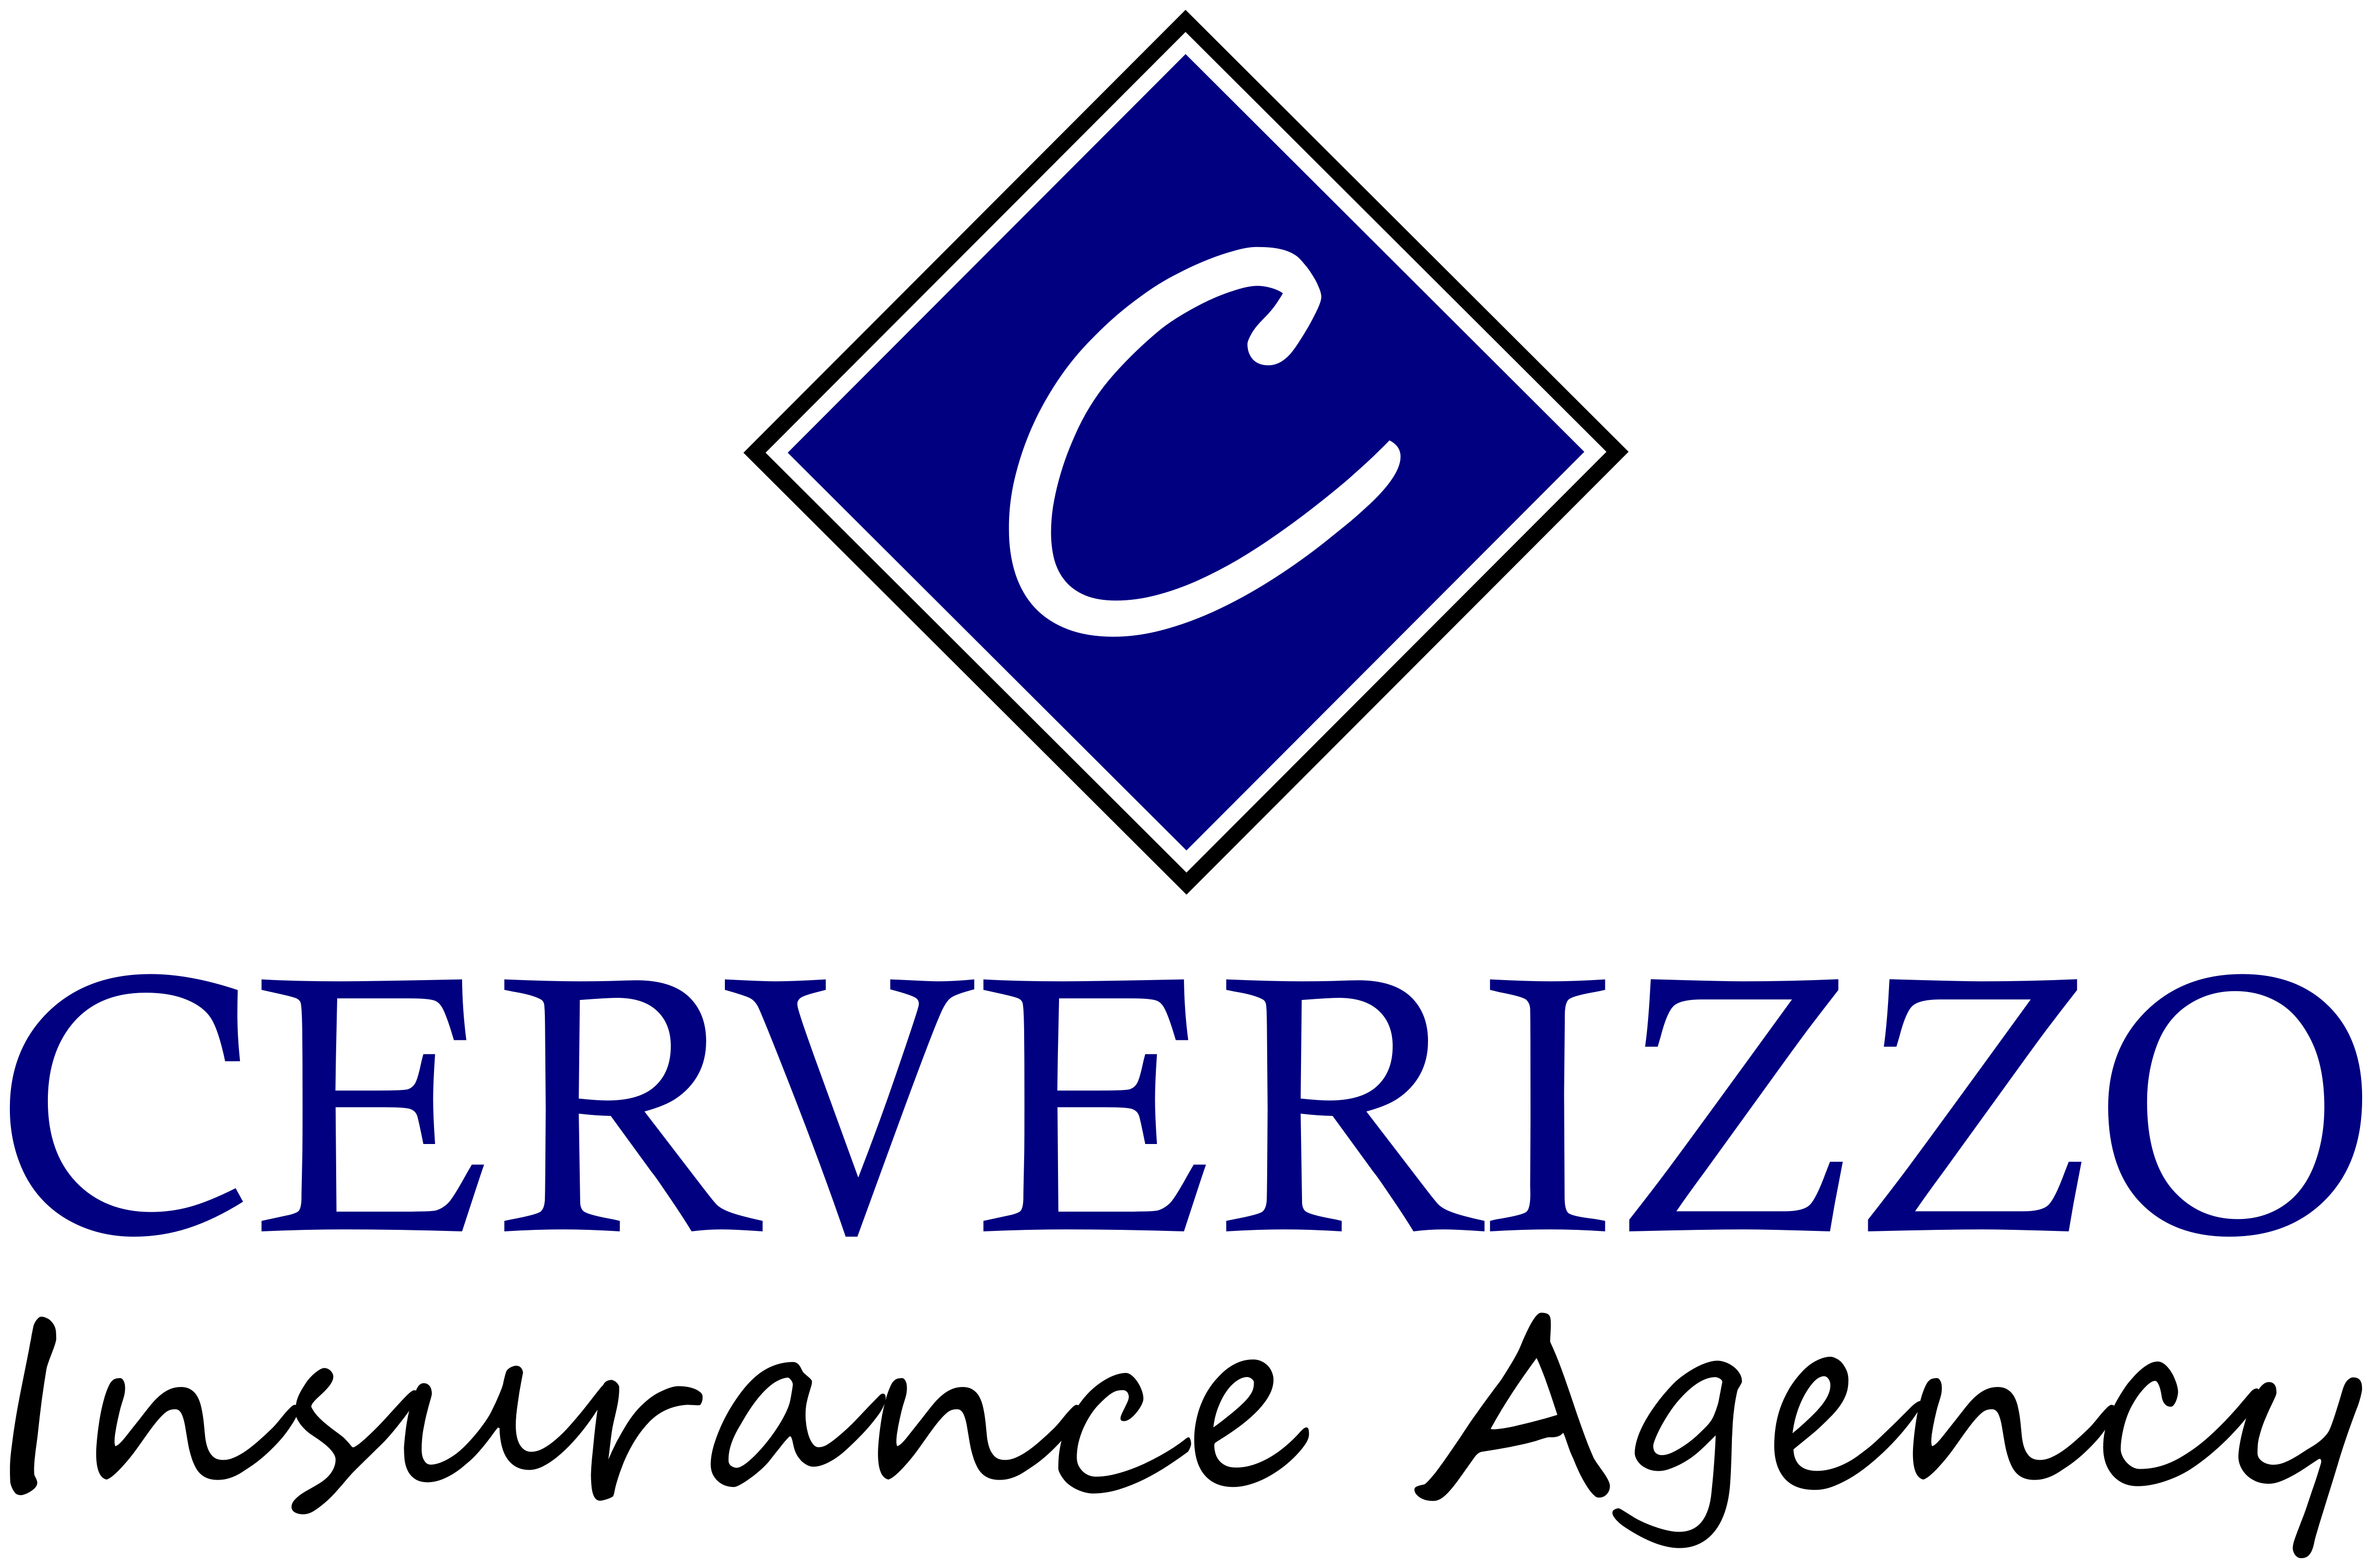 Cerverizzo Insurance Agency